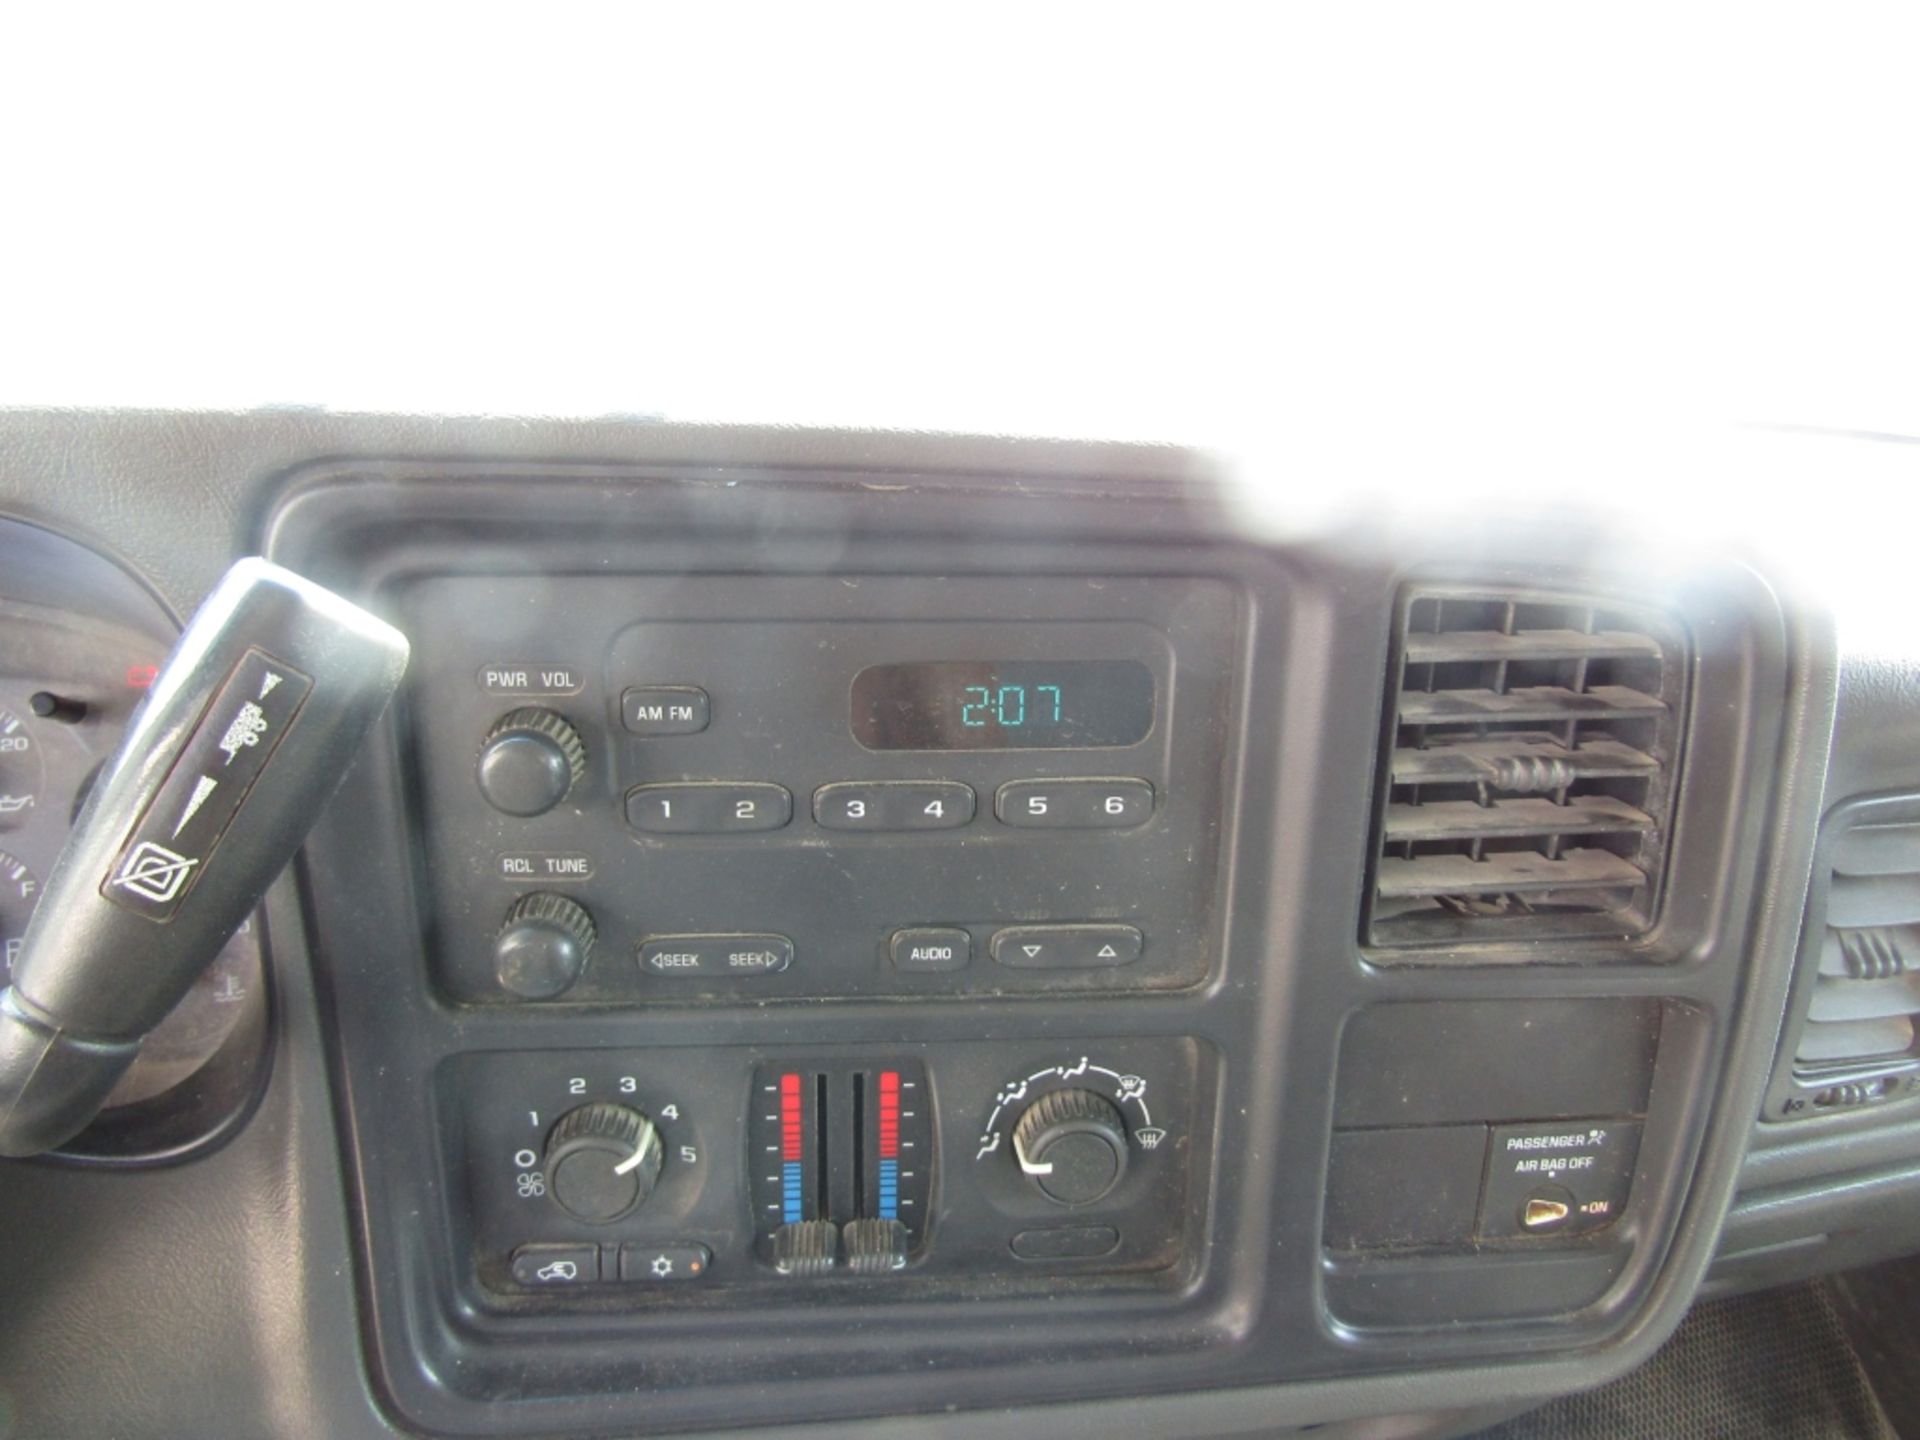 2004 GMC 3500 Duramax Crew Cab Utility Truck, Diesel Dually, VIN #1GDJC39104E119177, 121 306 - Image 11 of 24